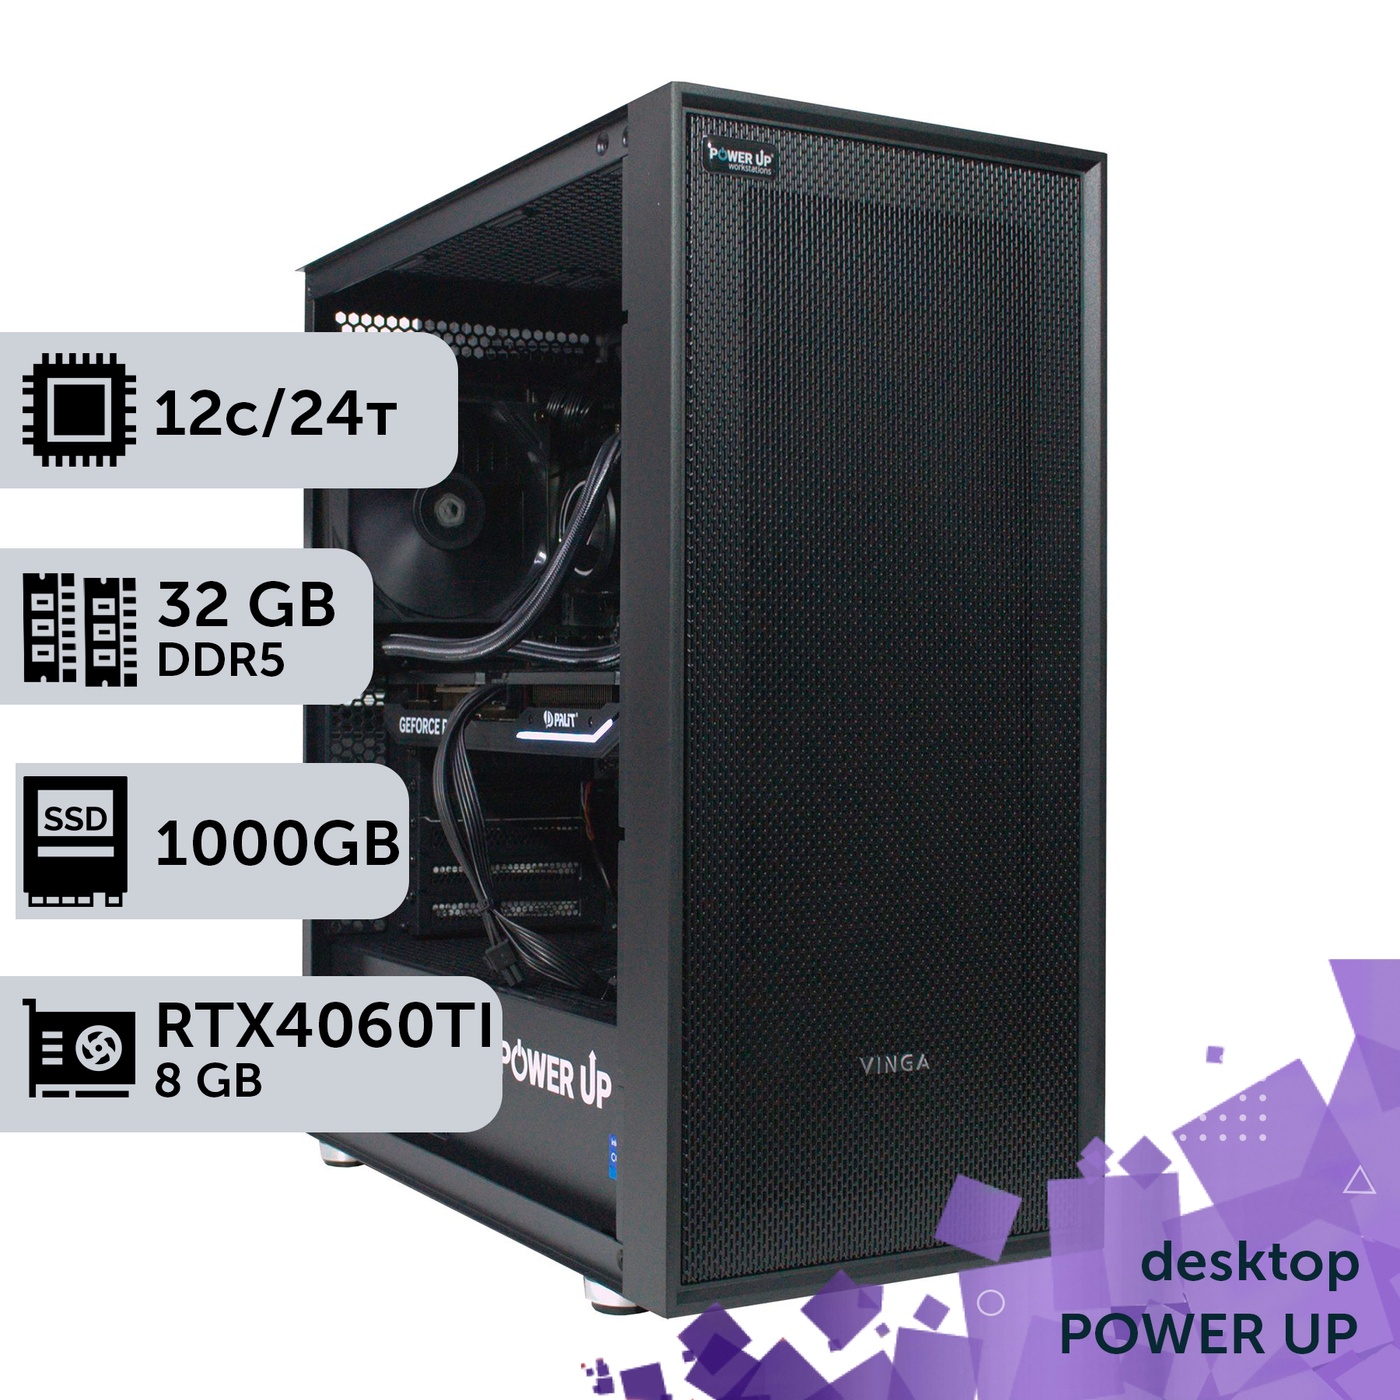 Рабочая станция PowerUp Desktop #270 Ryzen 9 7900x/32 GB/SSD 1TB/GeForce RTX 4060Ti 8GB